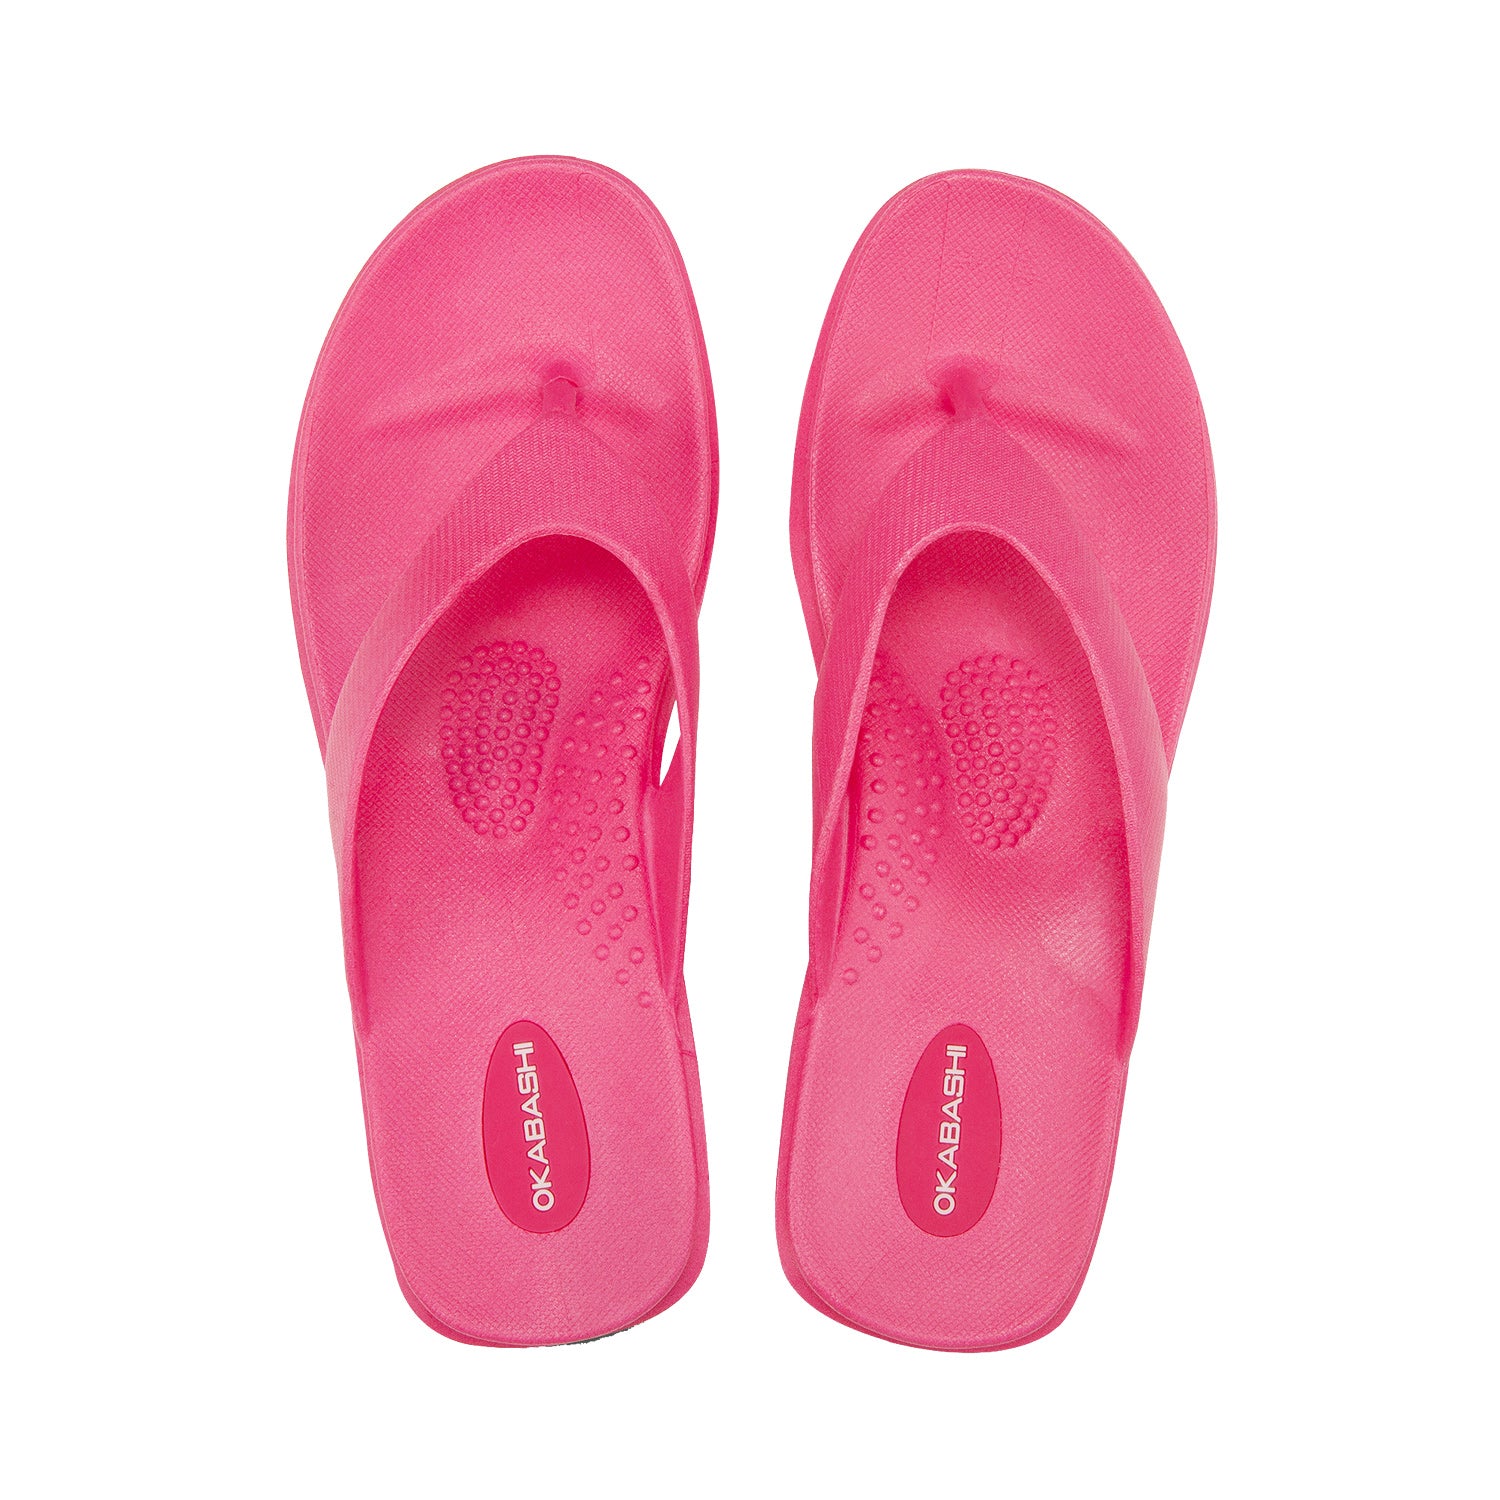  Saichi Slim Wedge Flip Flops Platform Sandals Beach Summer  Casual Shoes for Women (Black, adult, women, numeric_5_point_5, numeric,  us_footwear_size_system, medium)